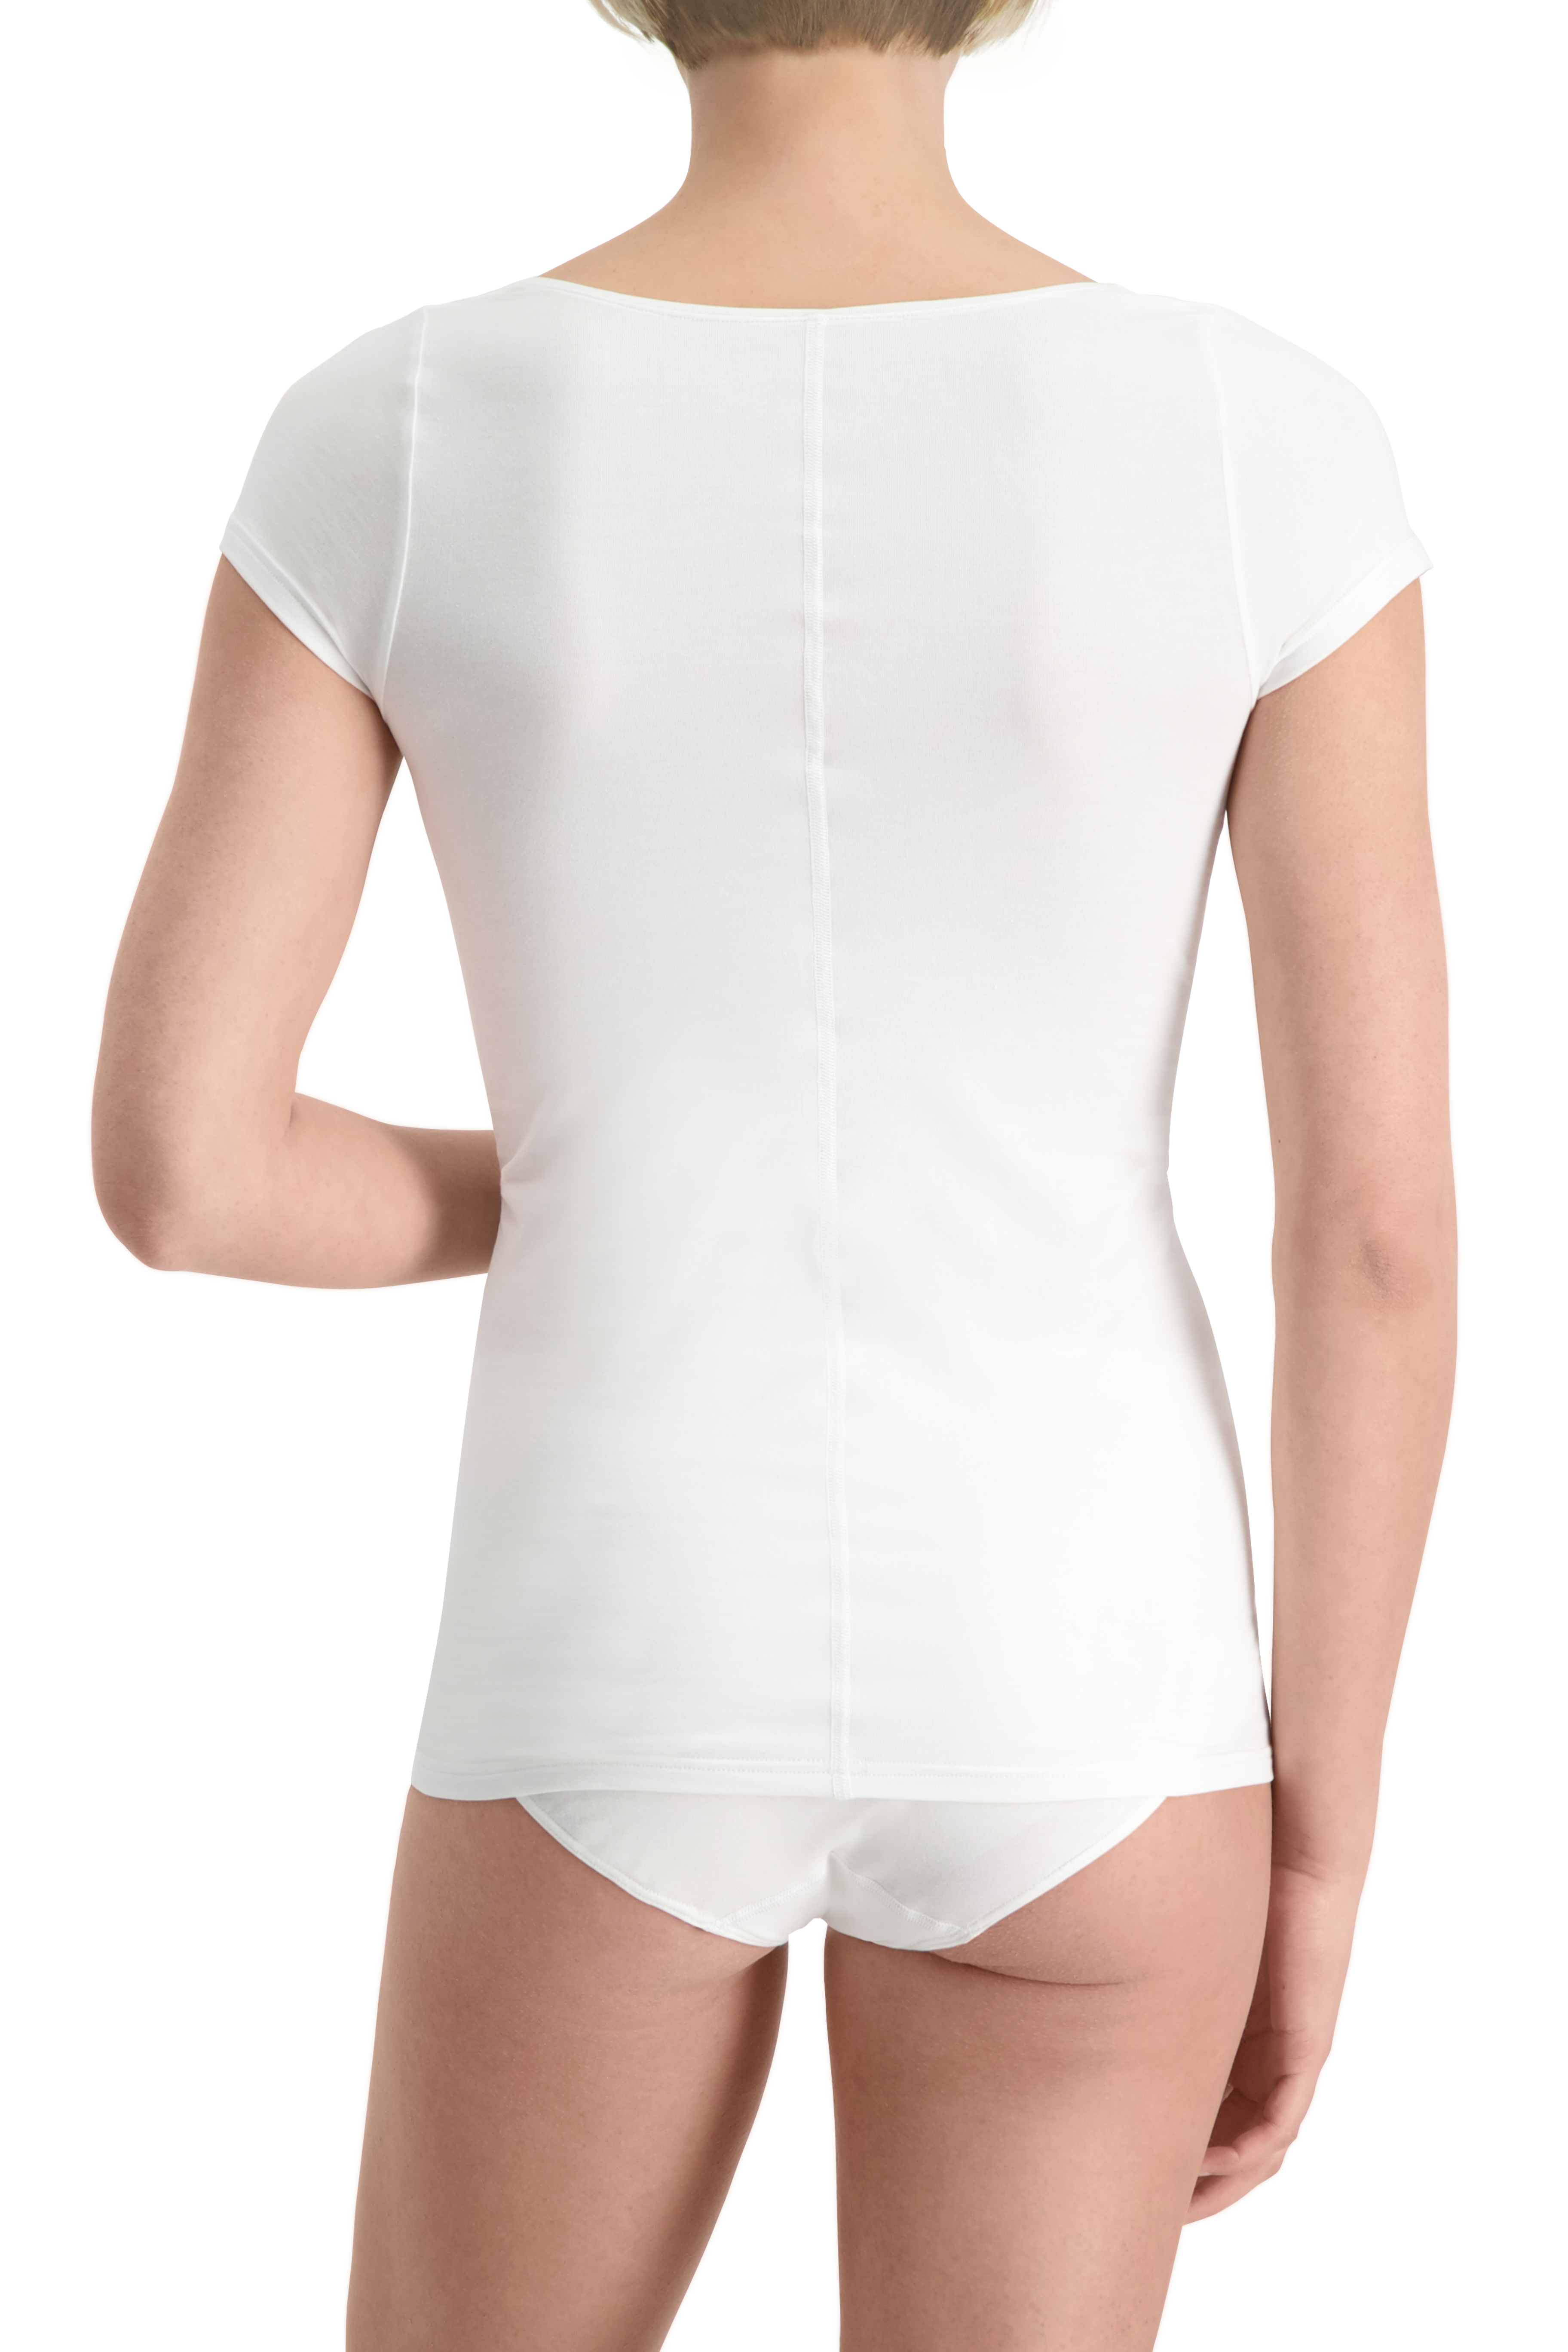 women Invisible Noshirt undershirt - sleeve for short